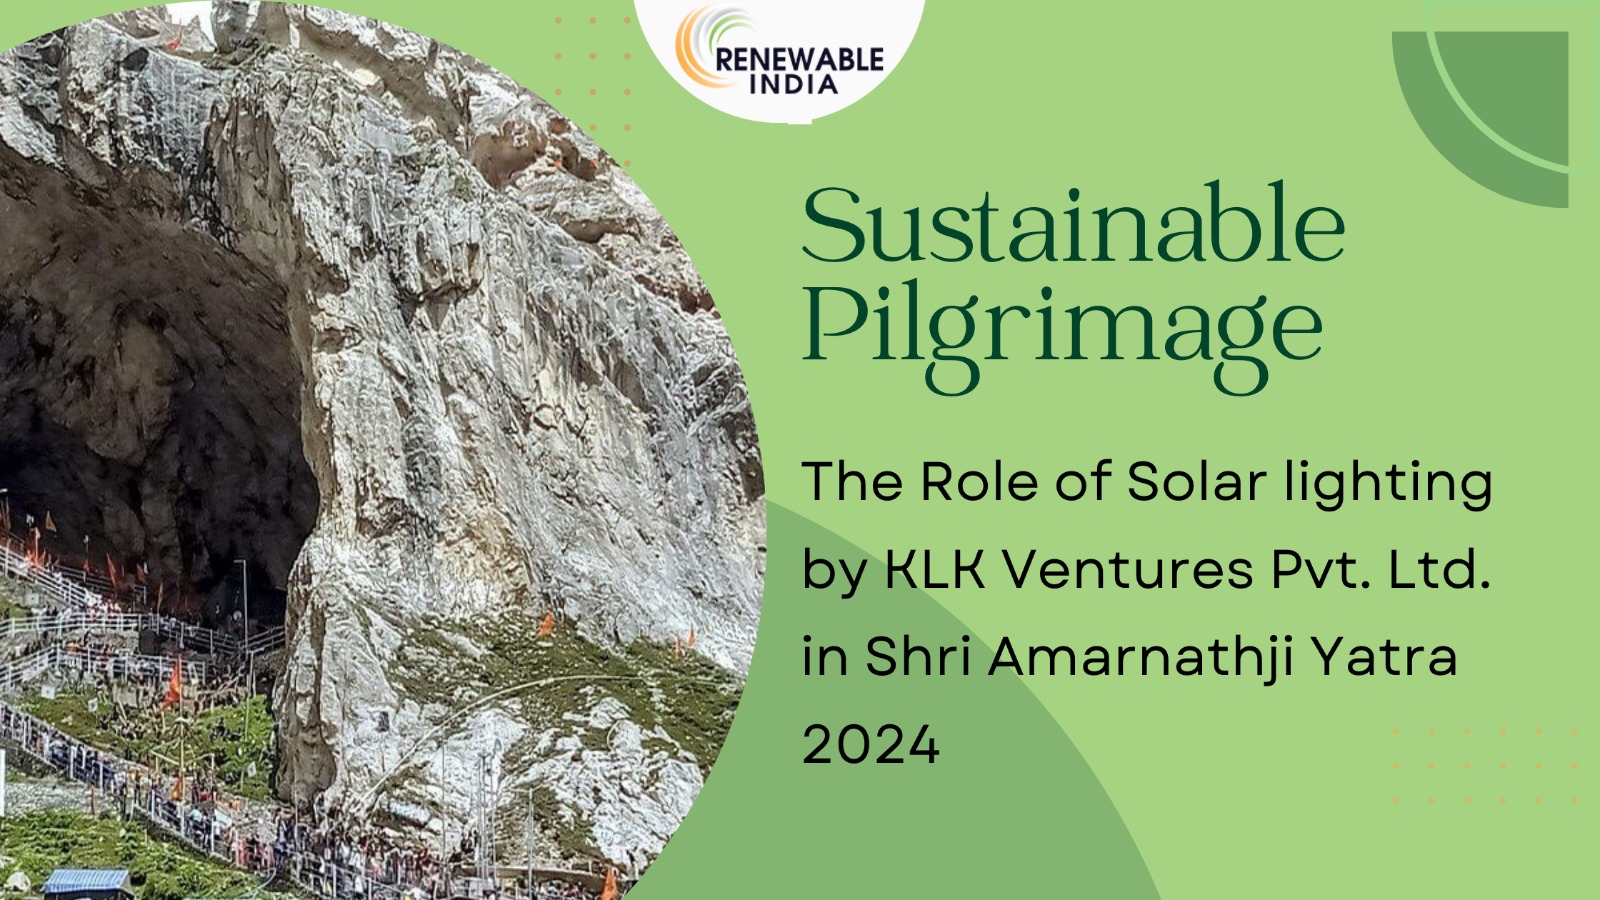 KLK Ventures Pvt. Ltd. to Supply, Install, and Maintain Solar Home Lighting Systems for Shri Amarnathji Yatra-2024